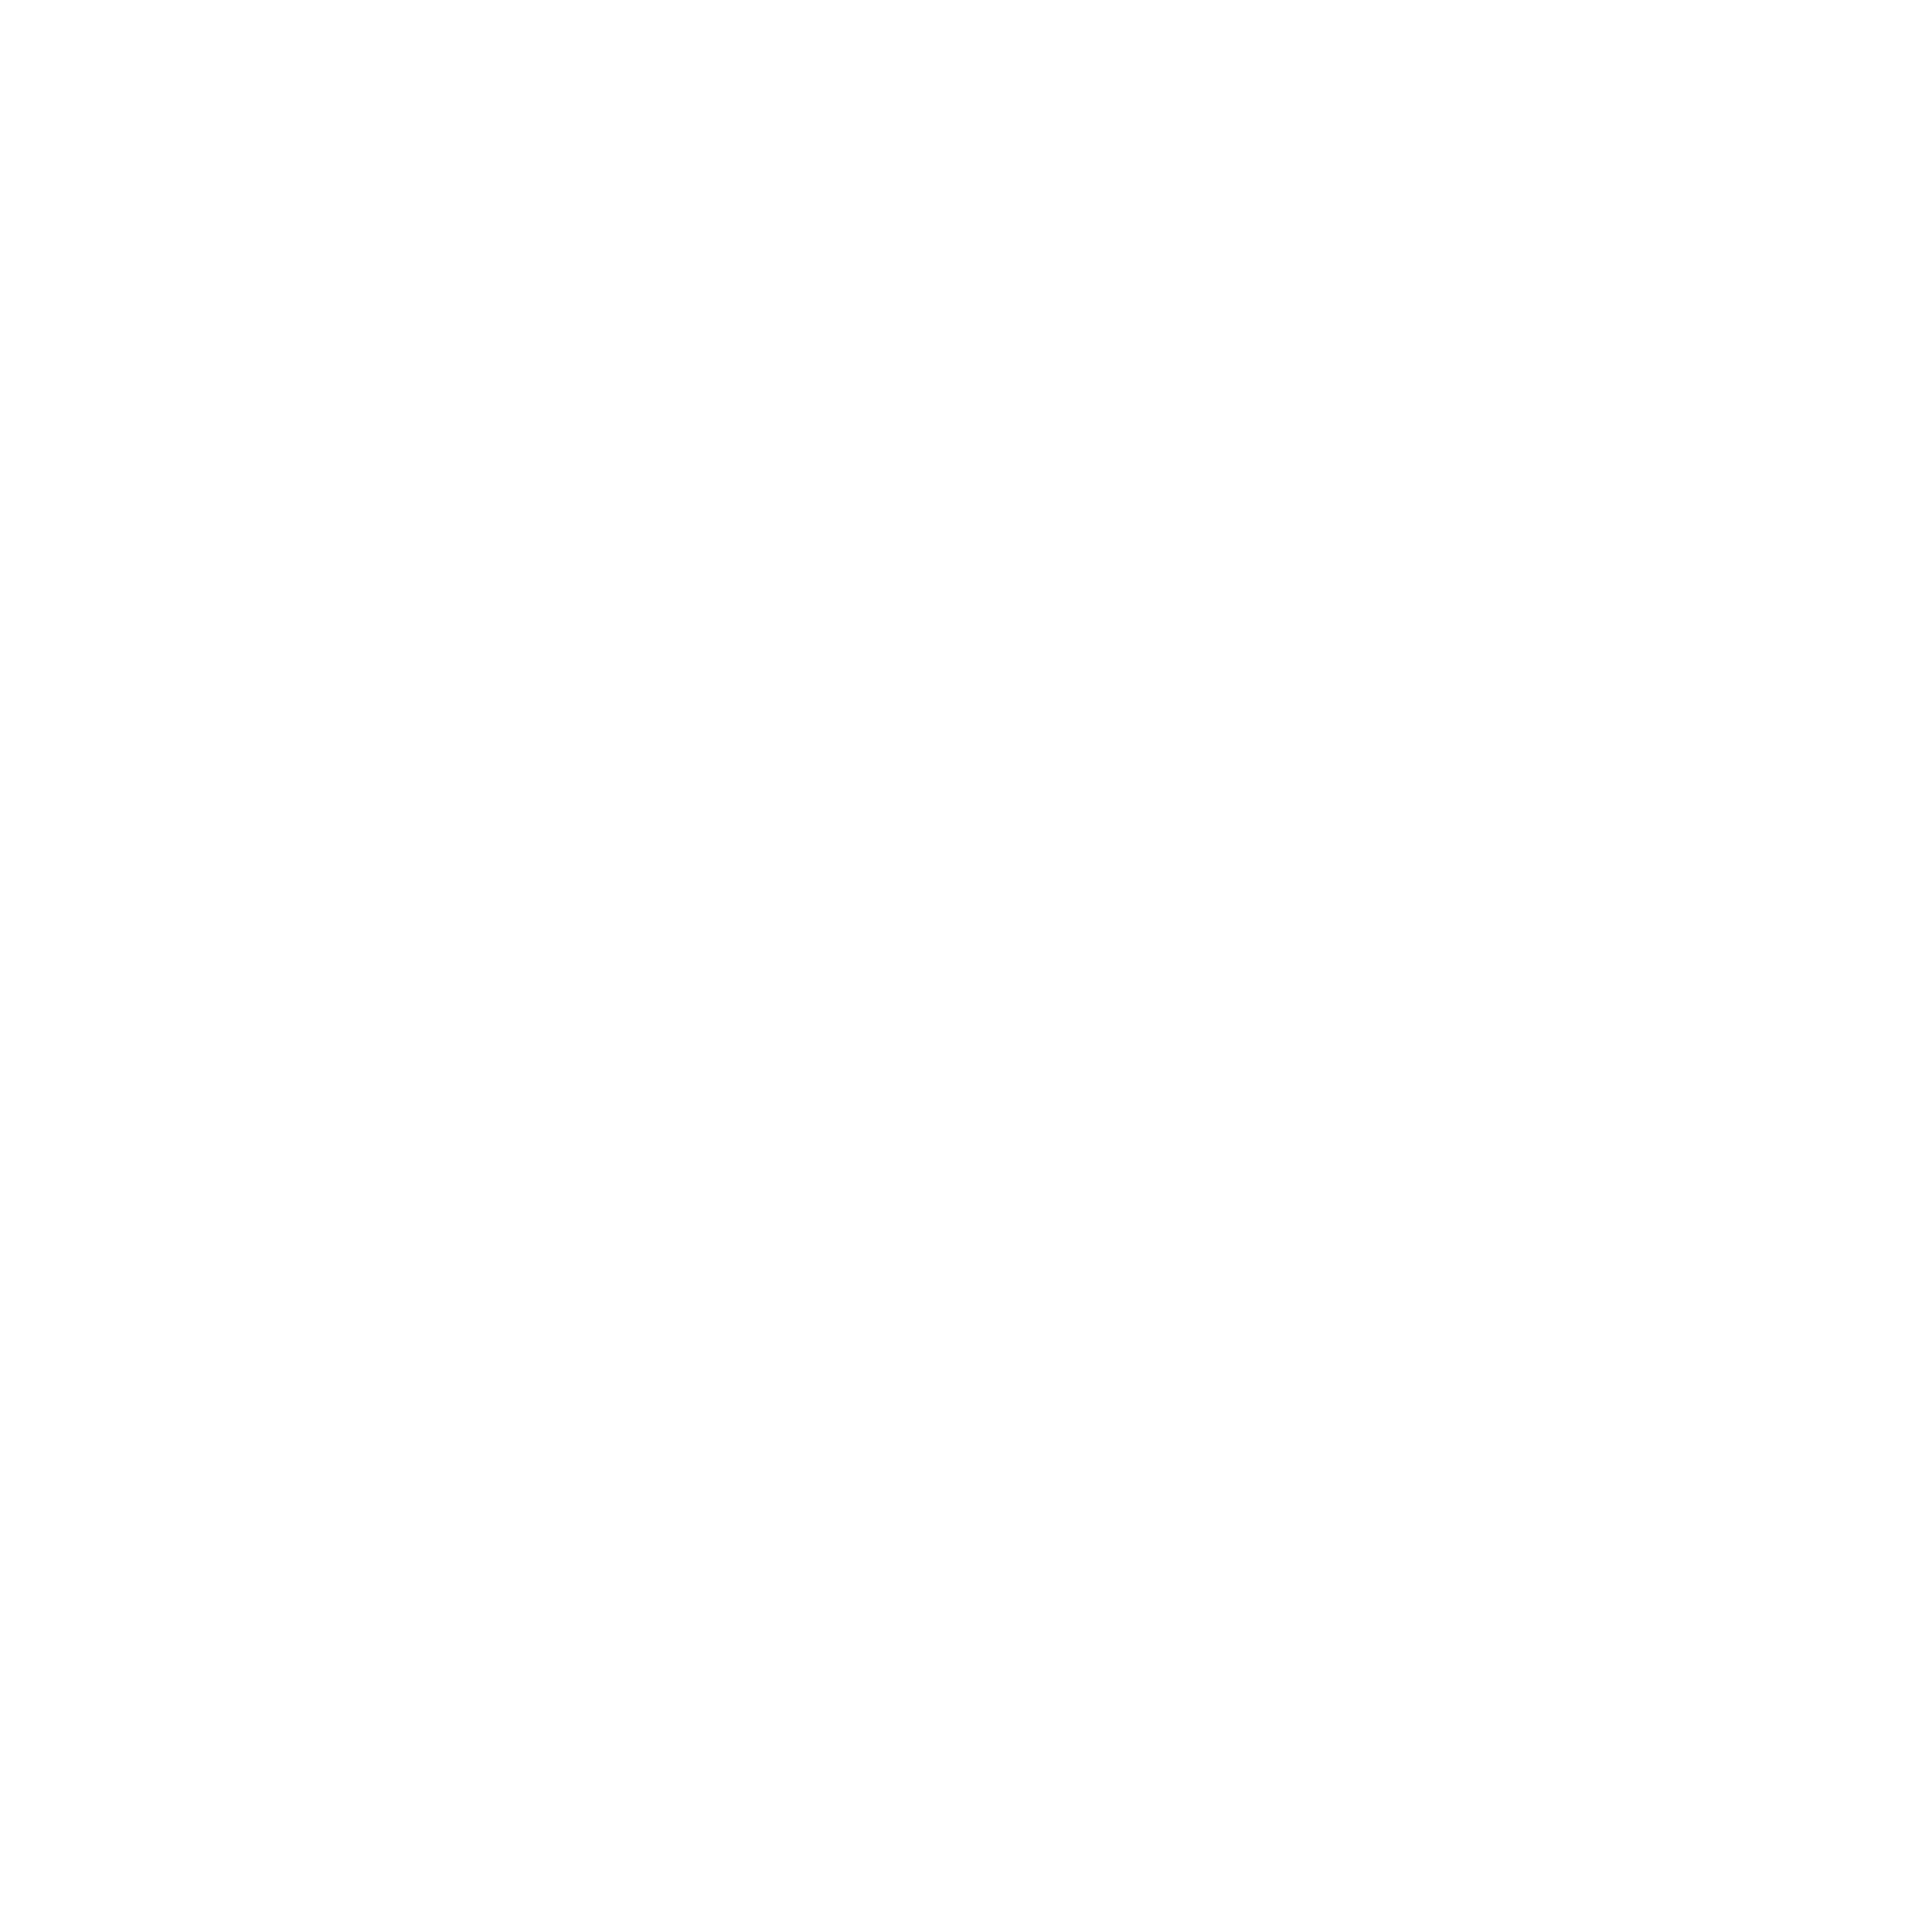 AniCura Atlântico Hospital Veterinário logo